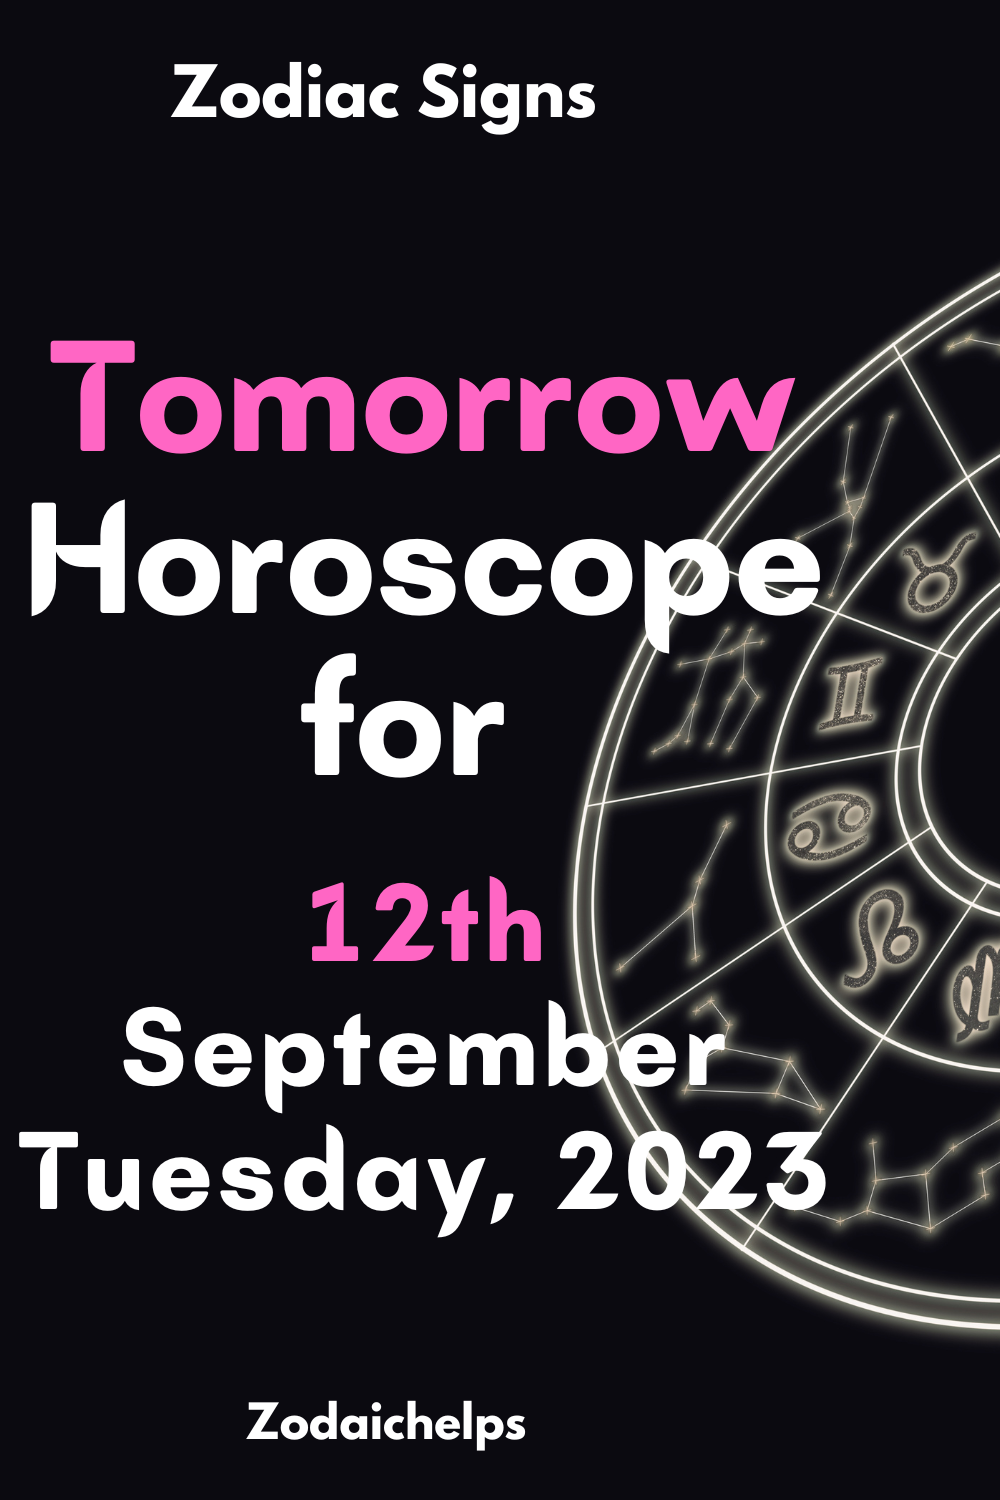 Tomorrow Horoscope for 12th September Tuesday, 2023